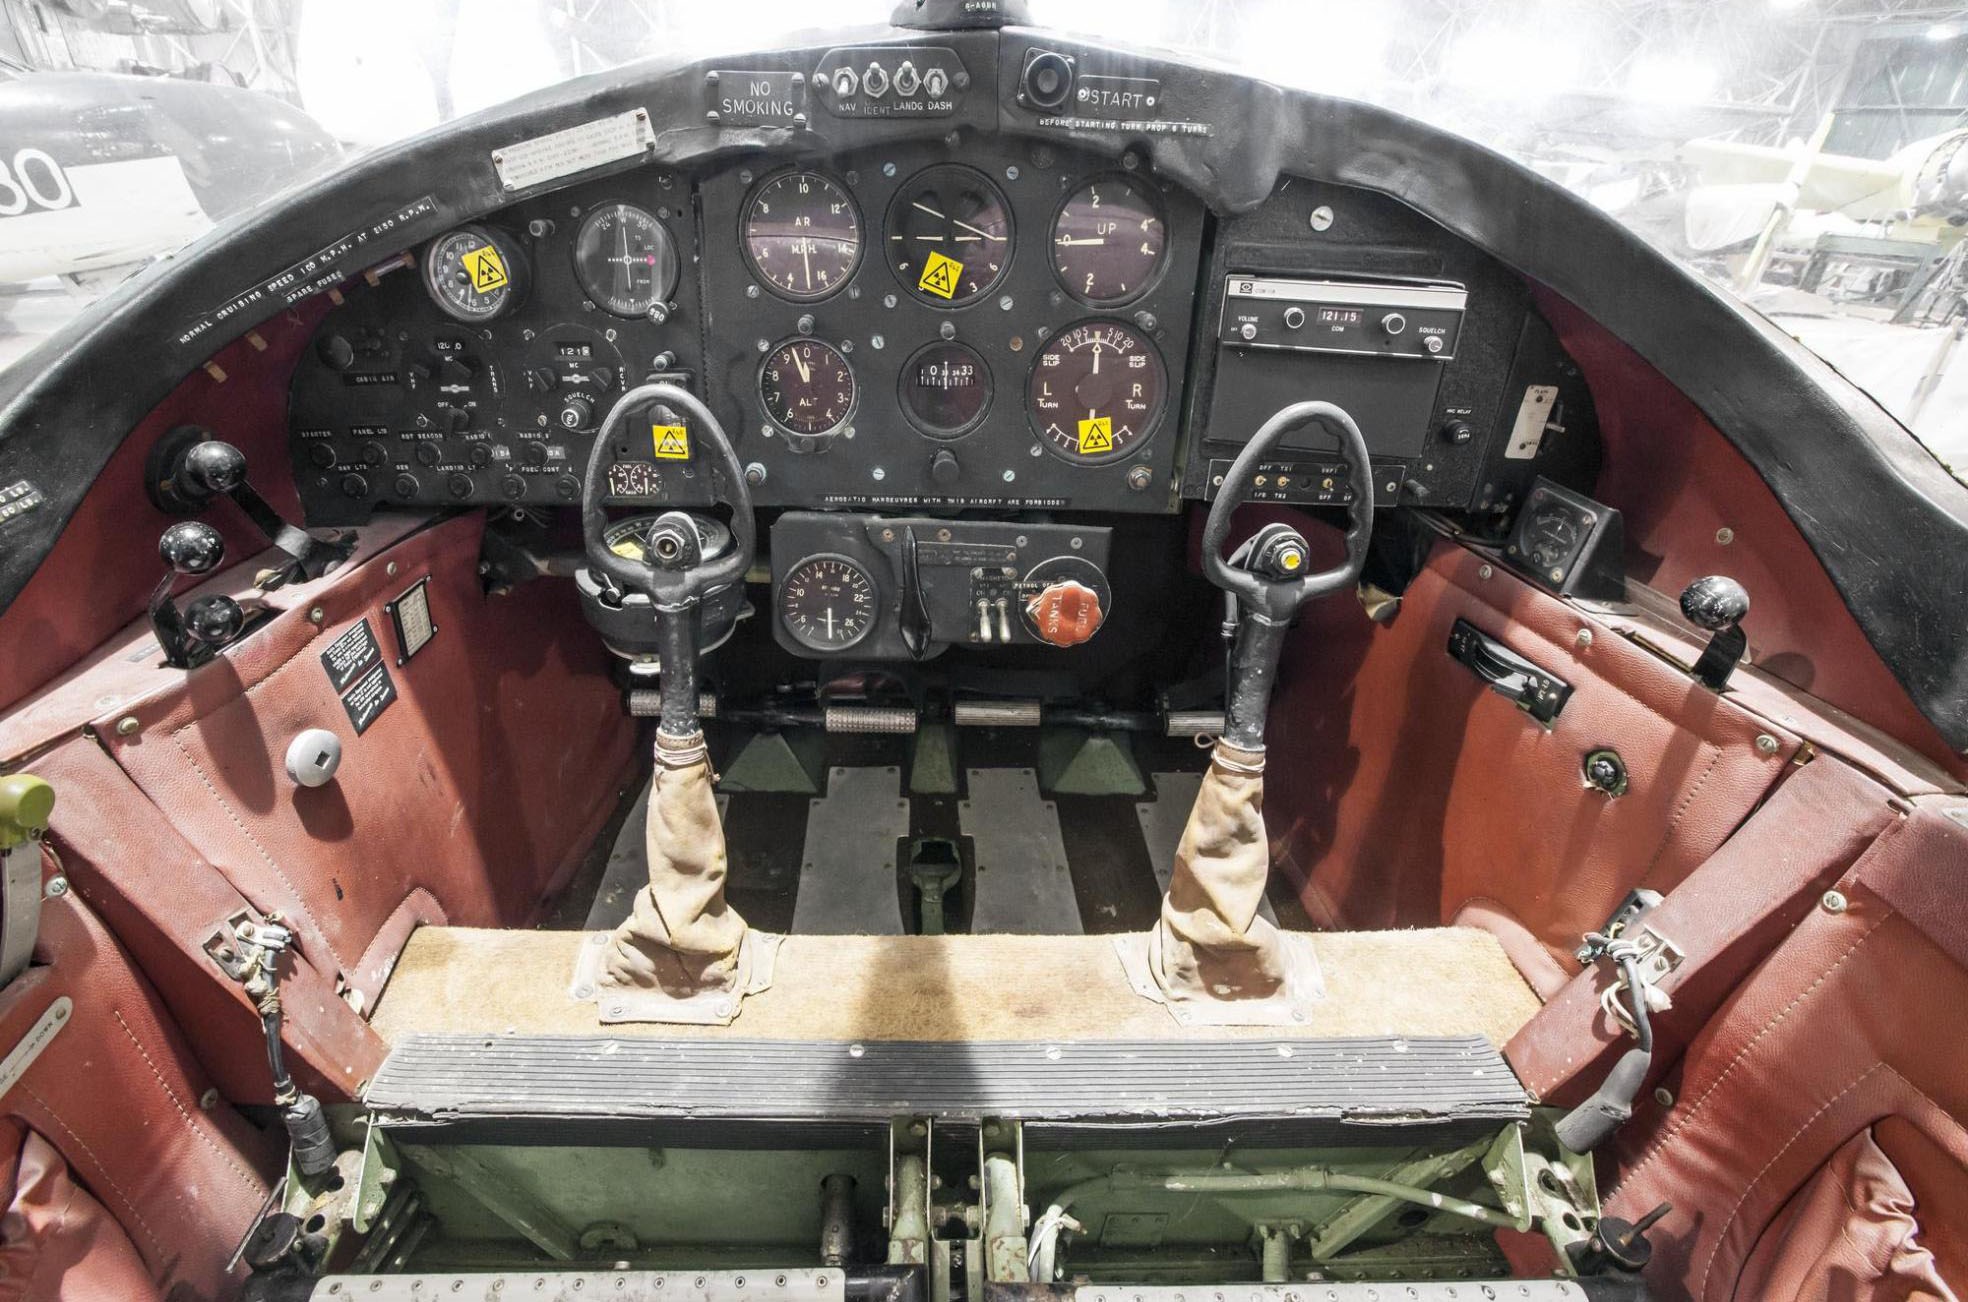 Inside the cockpit of a Cygnet aircraft.